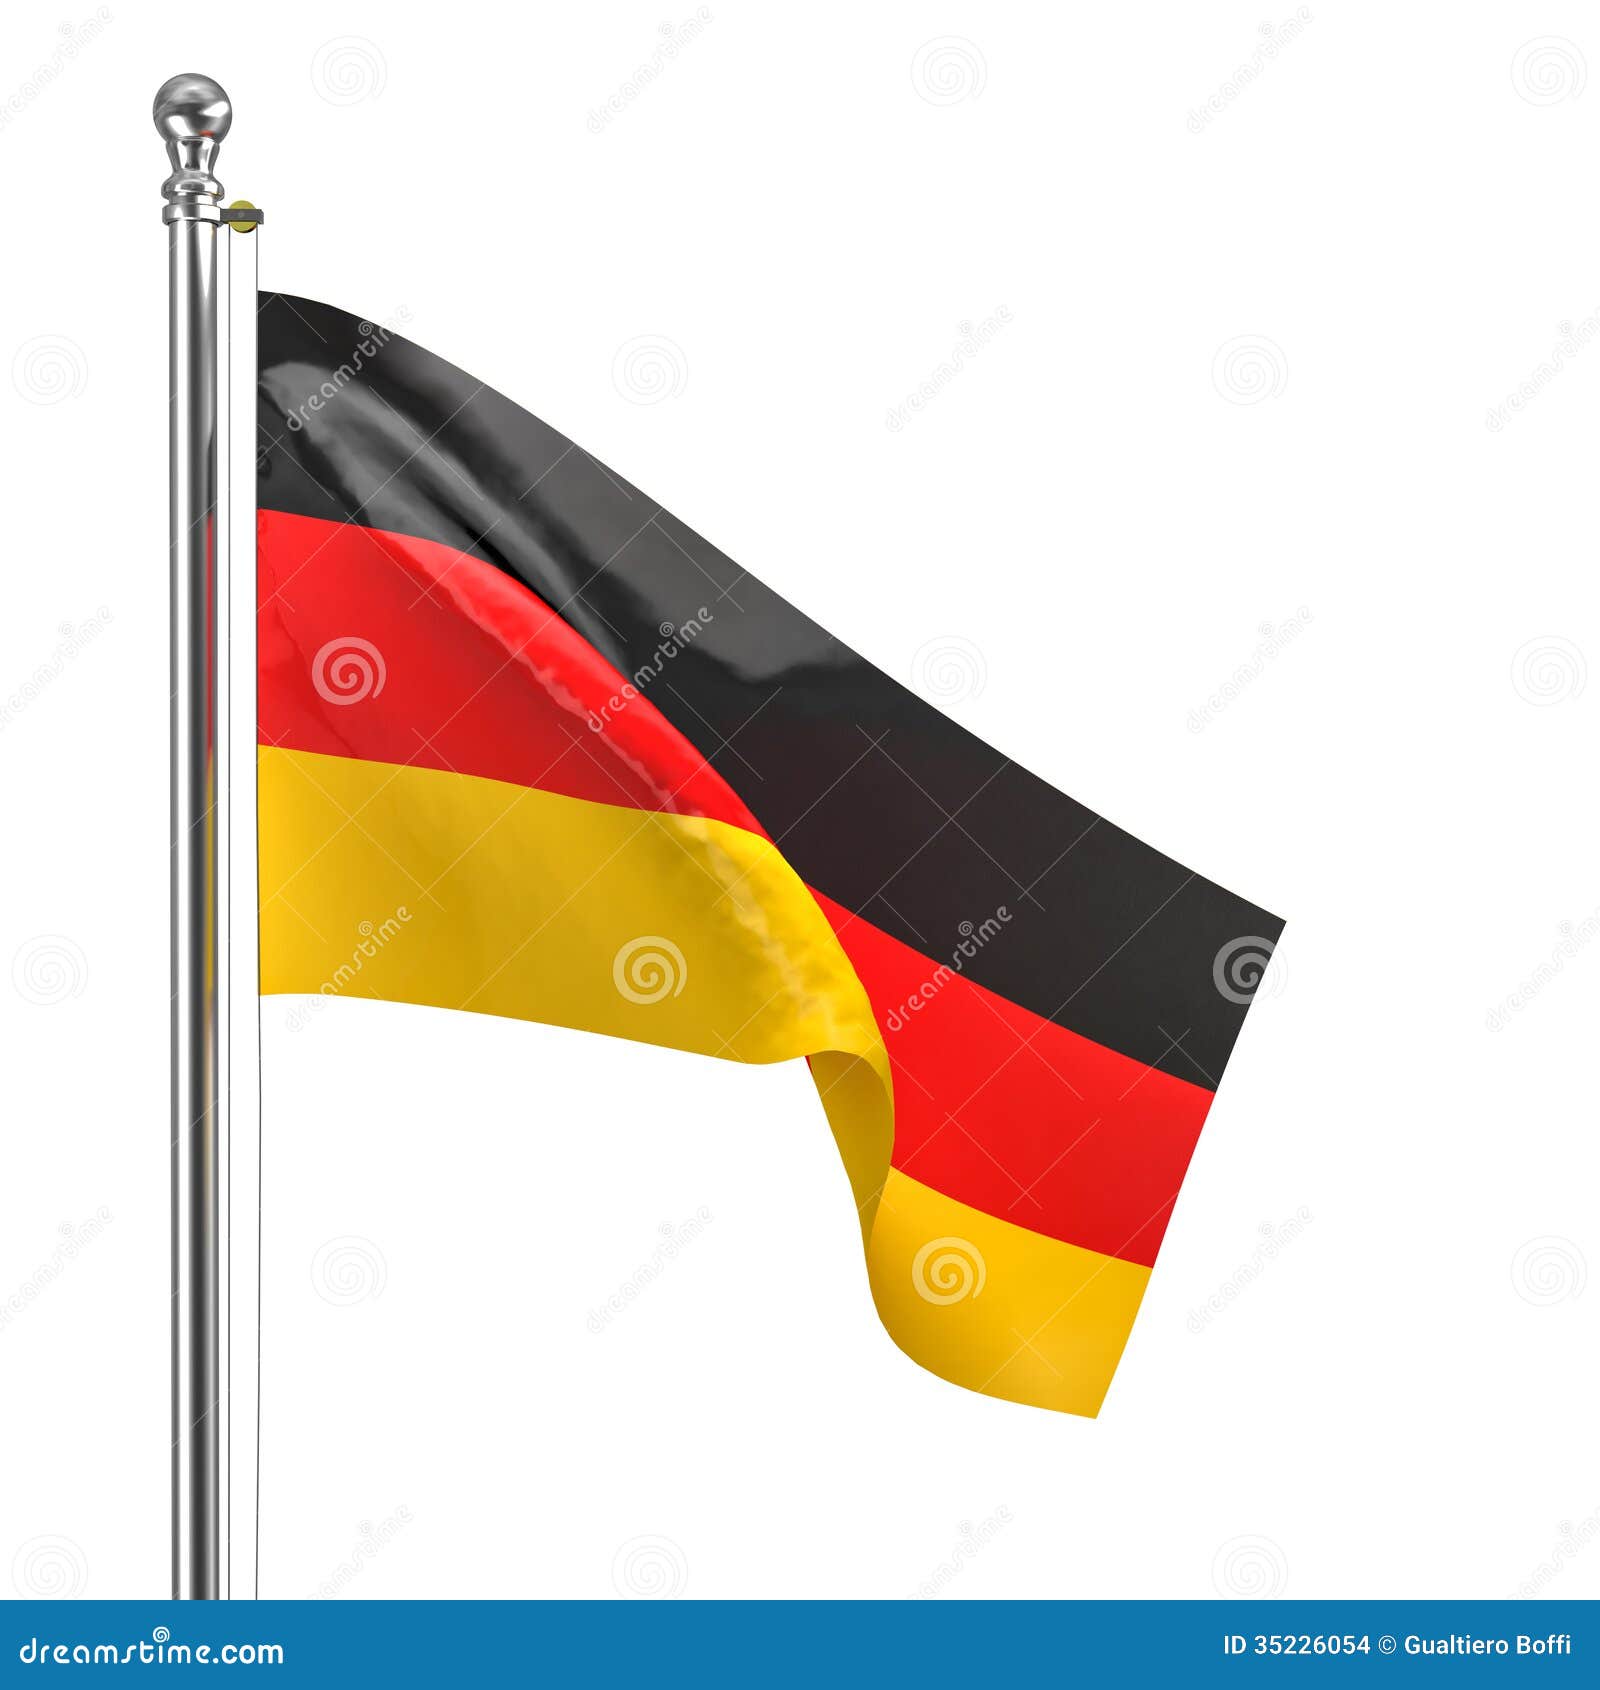 German flag stock illustration. Illustration of german - 35226054